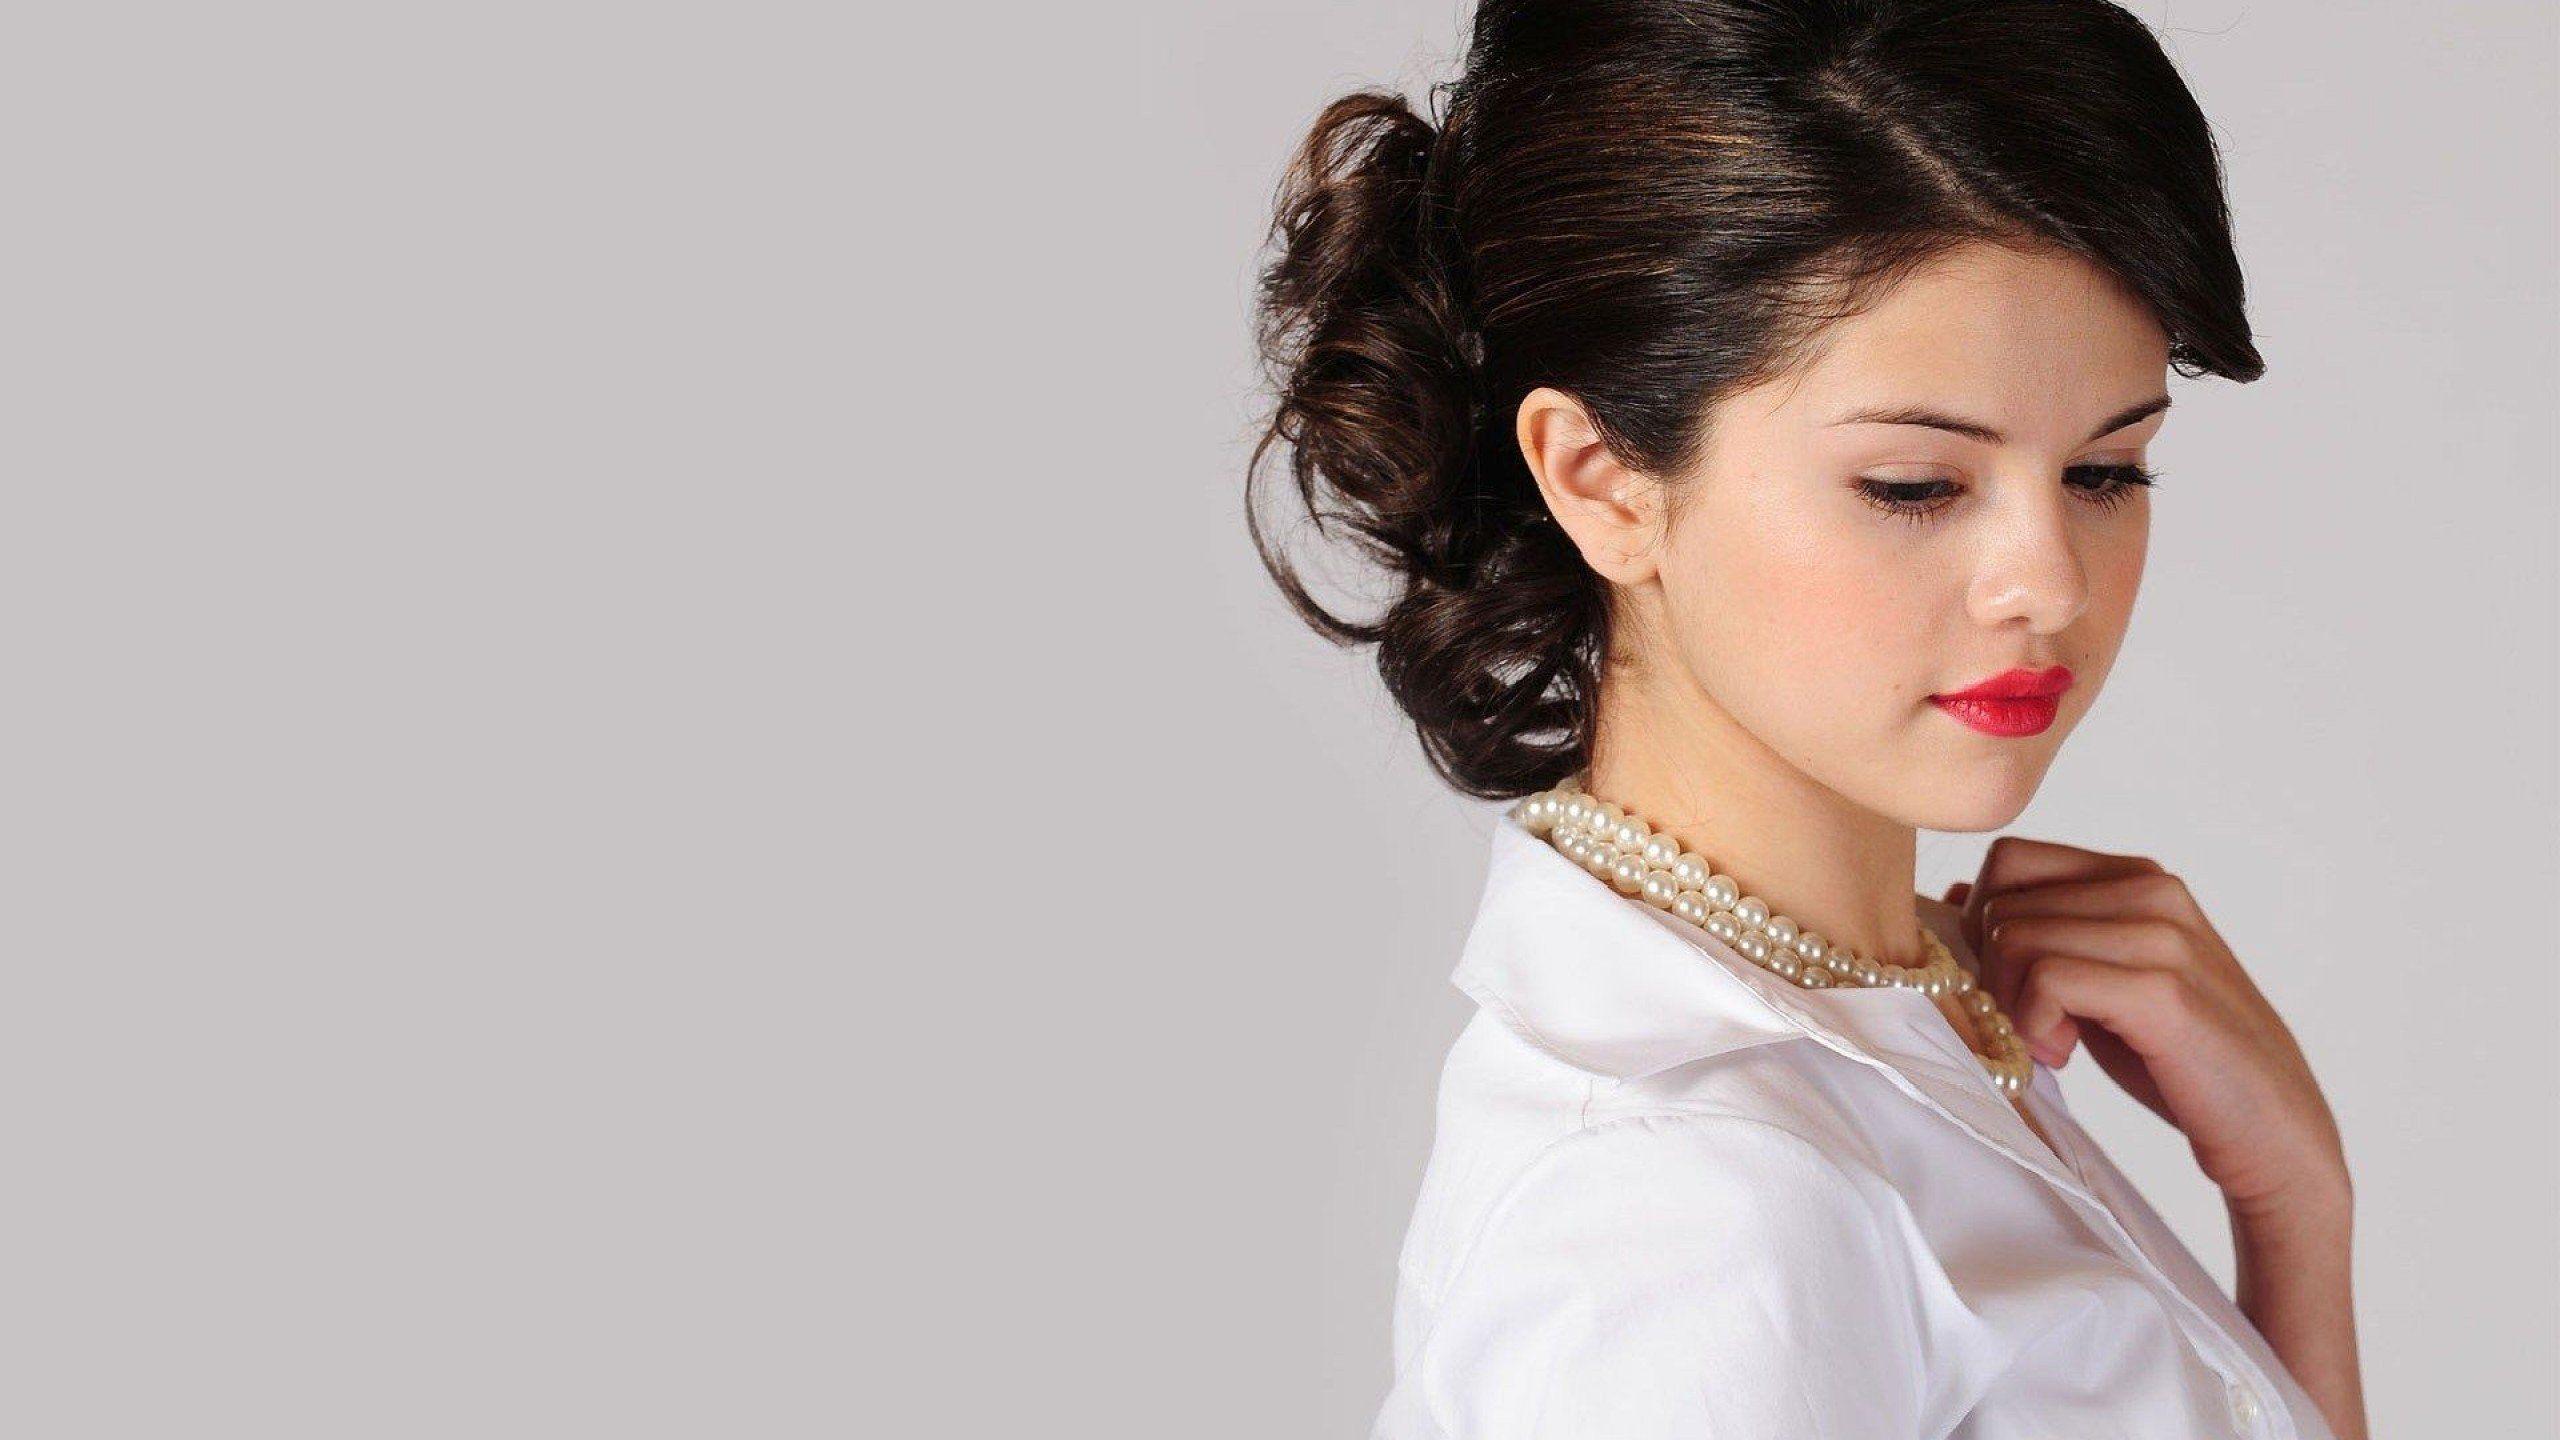 selena gomez actress vogue young girl wallpaper singer popular